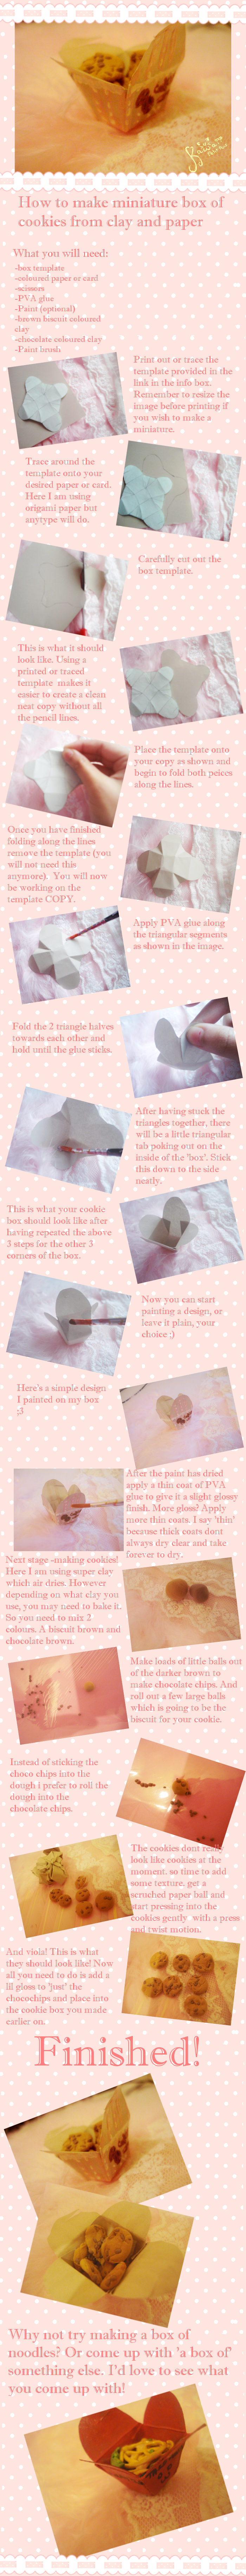 miniature_cookies_and_cookie_box_tutorial_by_kawaiipetitpois-d4qeq5z.png